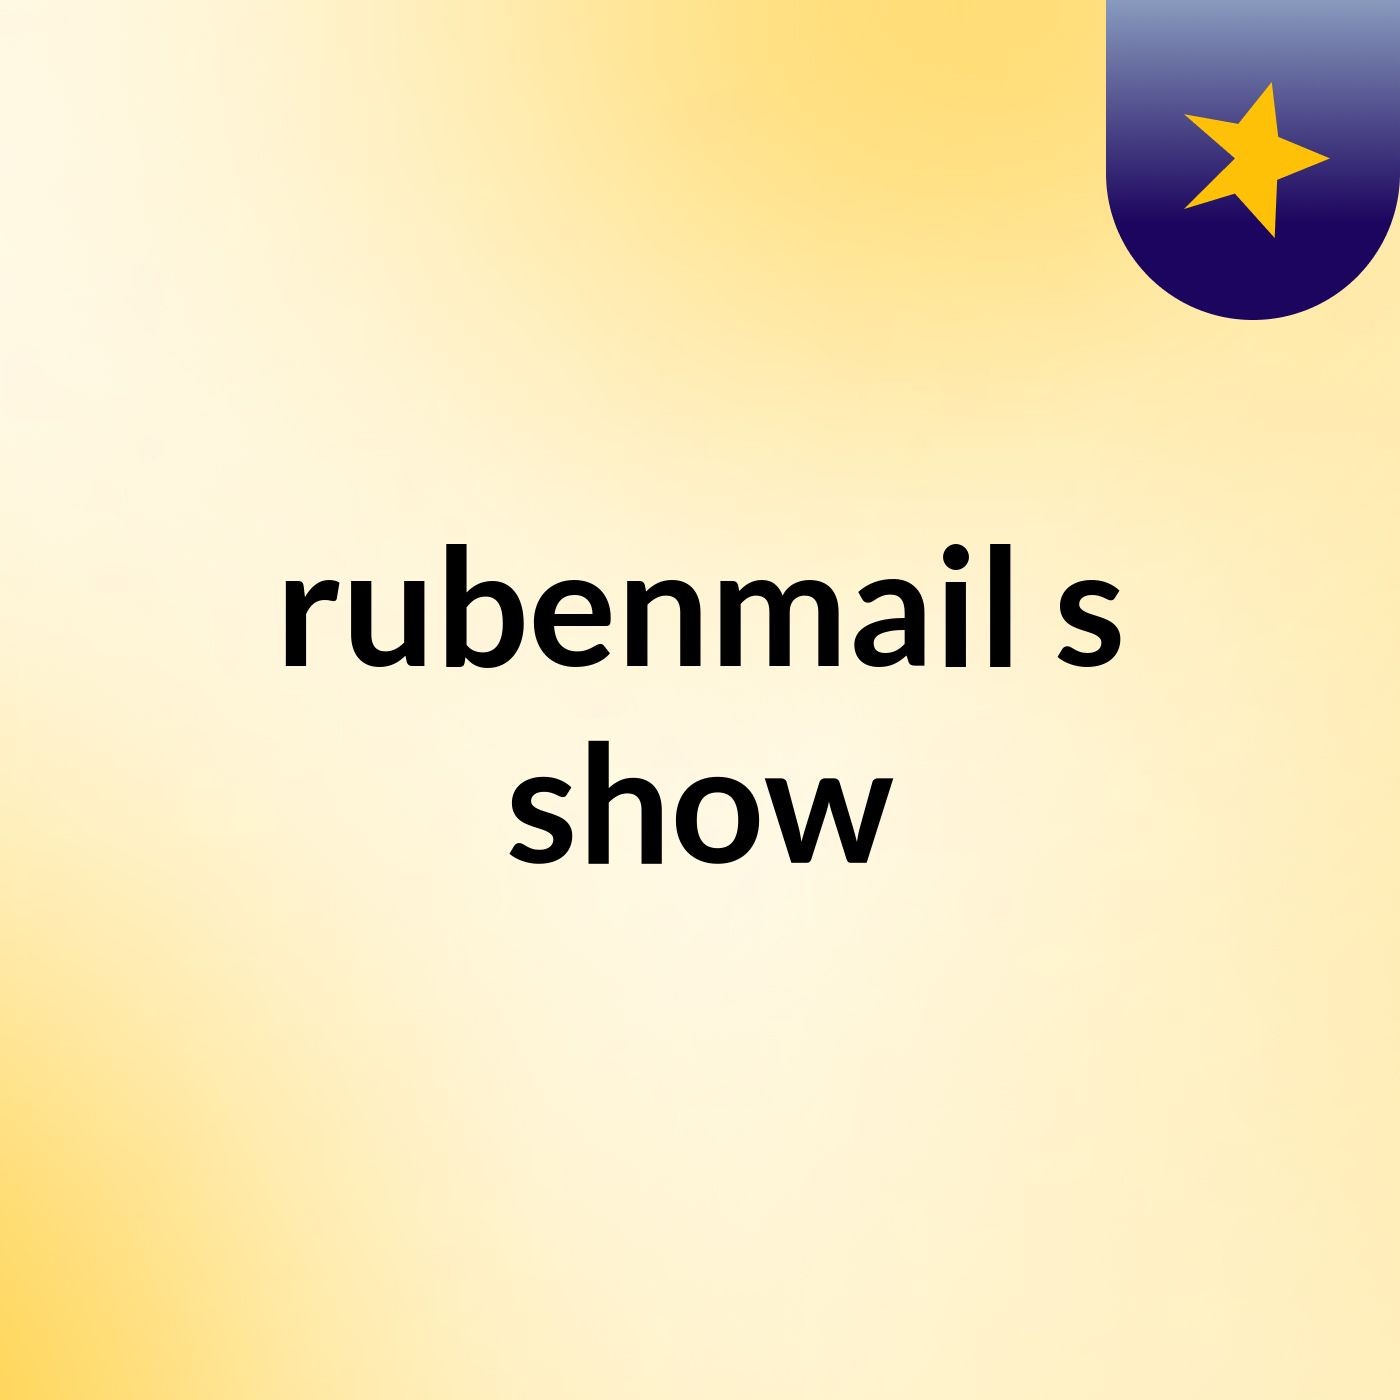 rubenmail's show